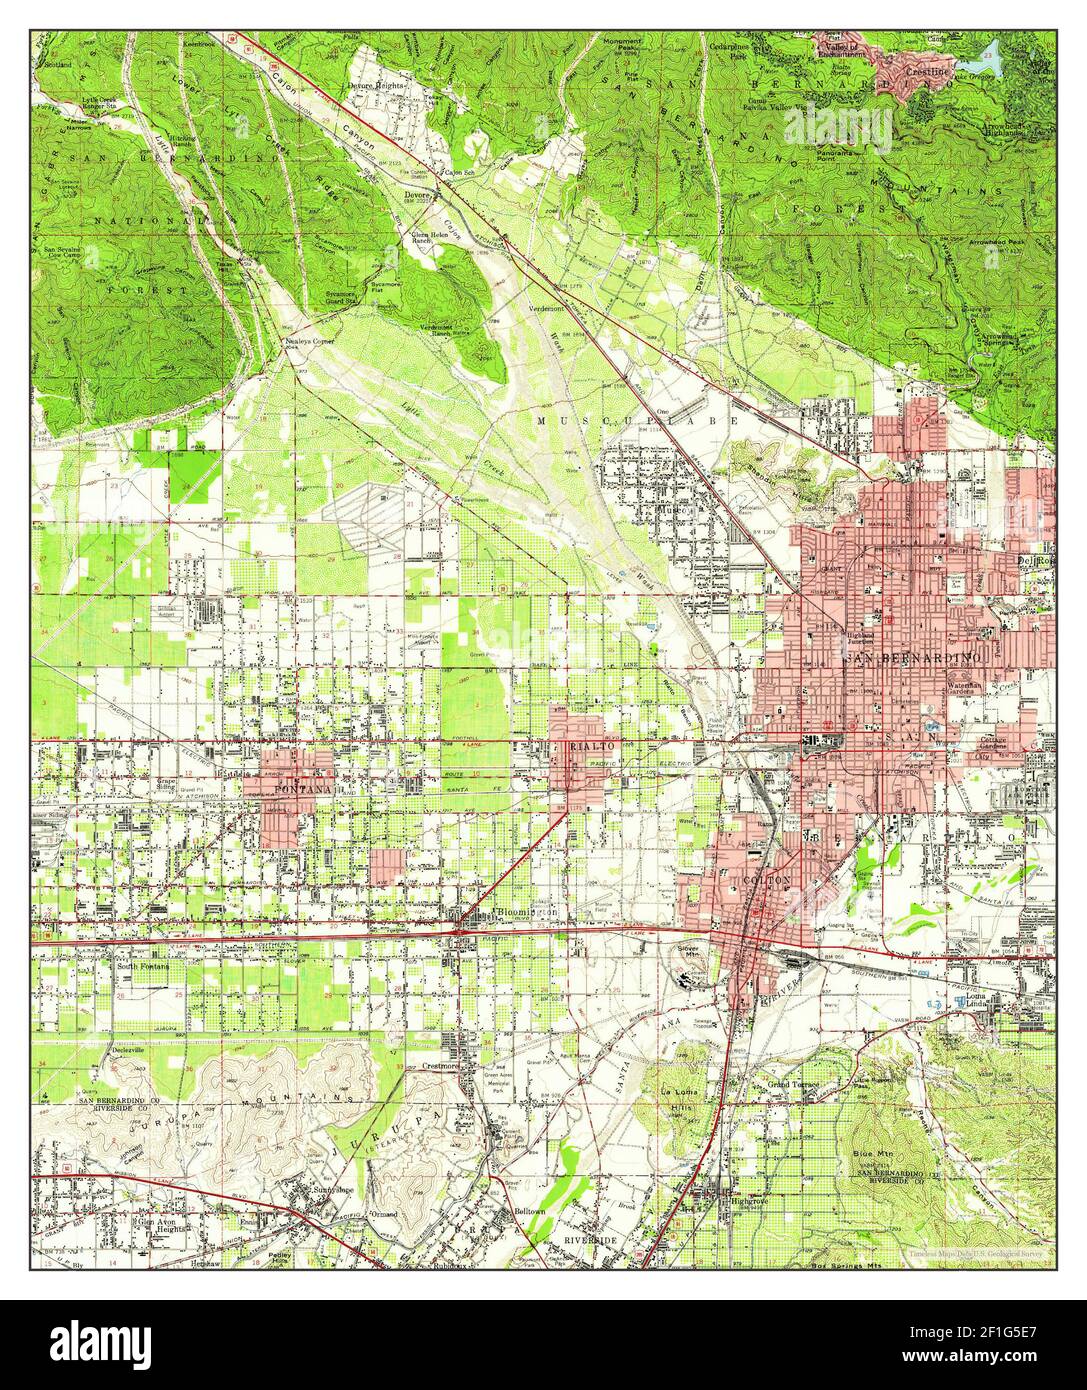 San Bernardino, California, map 1954, 1:62500, United States of America by Timeless Maps, data U.S. Geological Survey Foto Stock